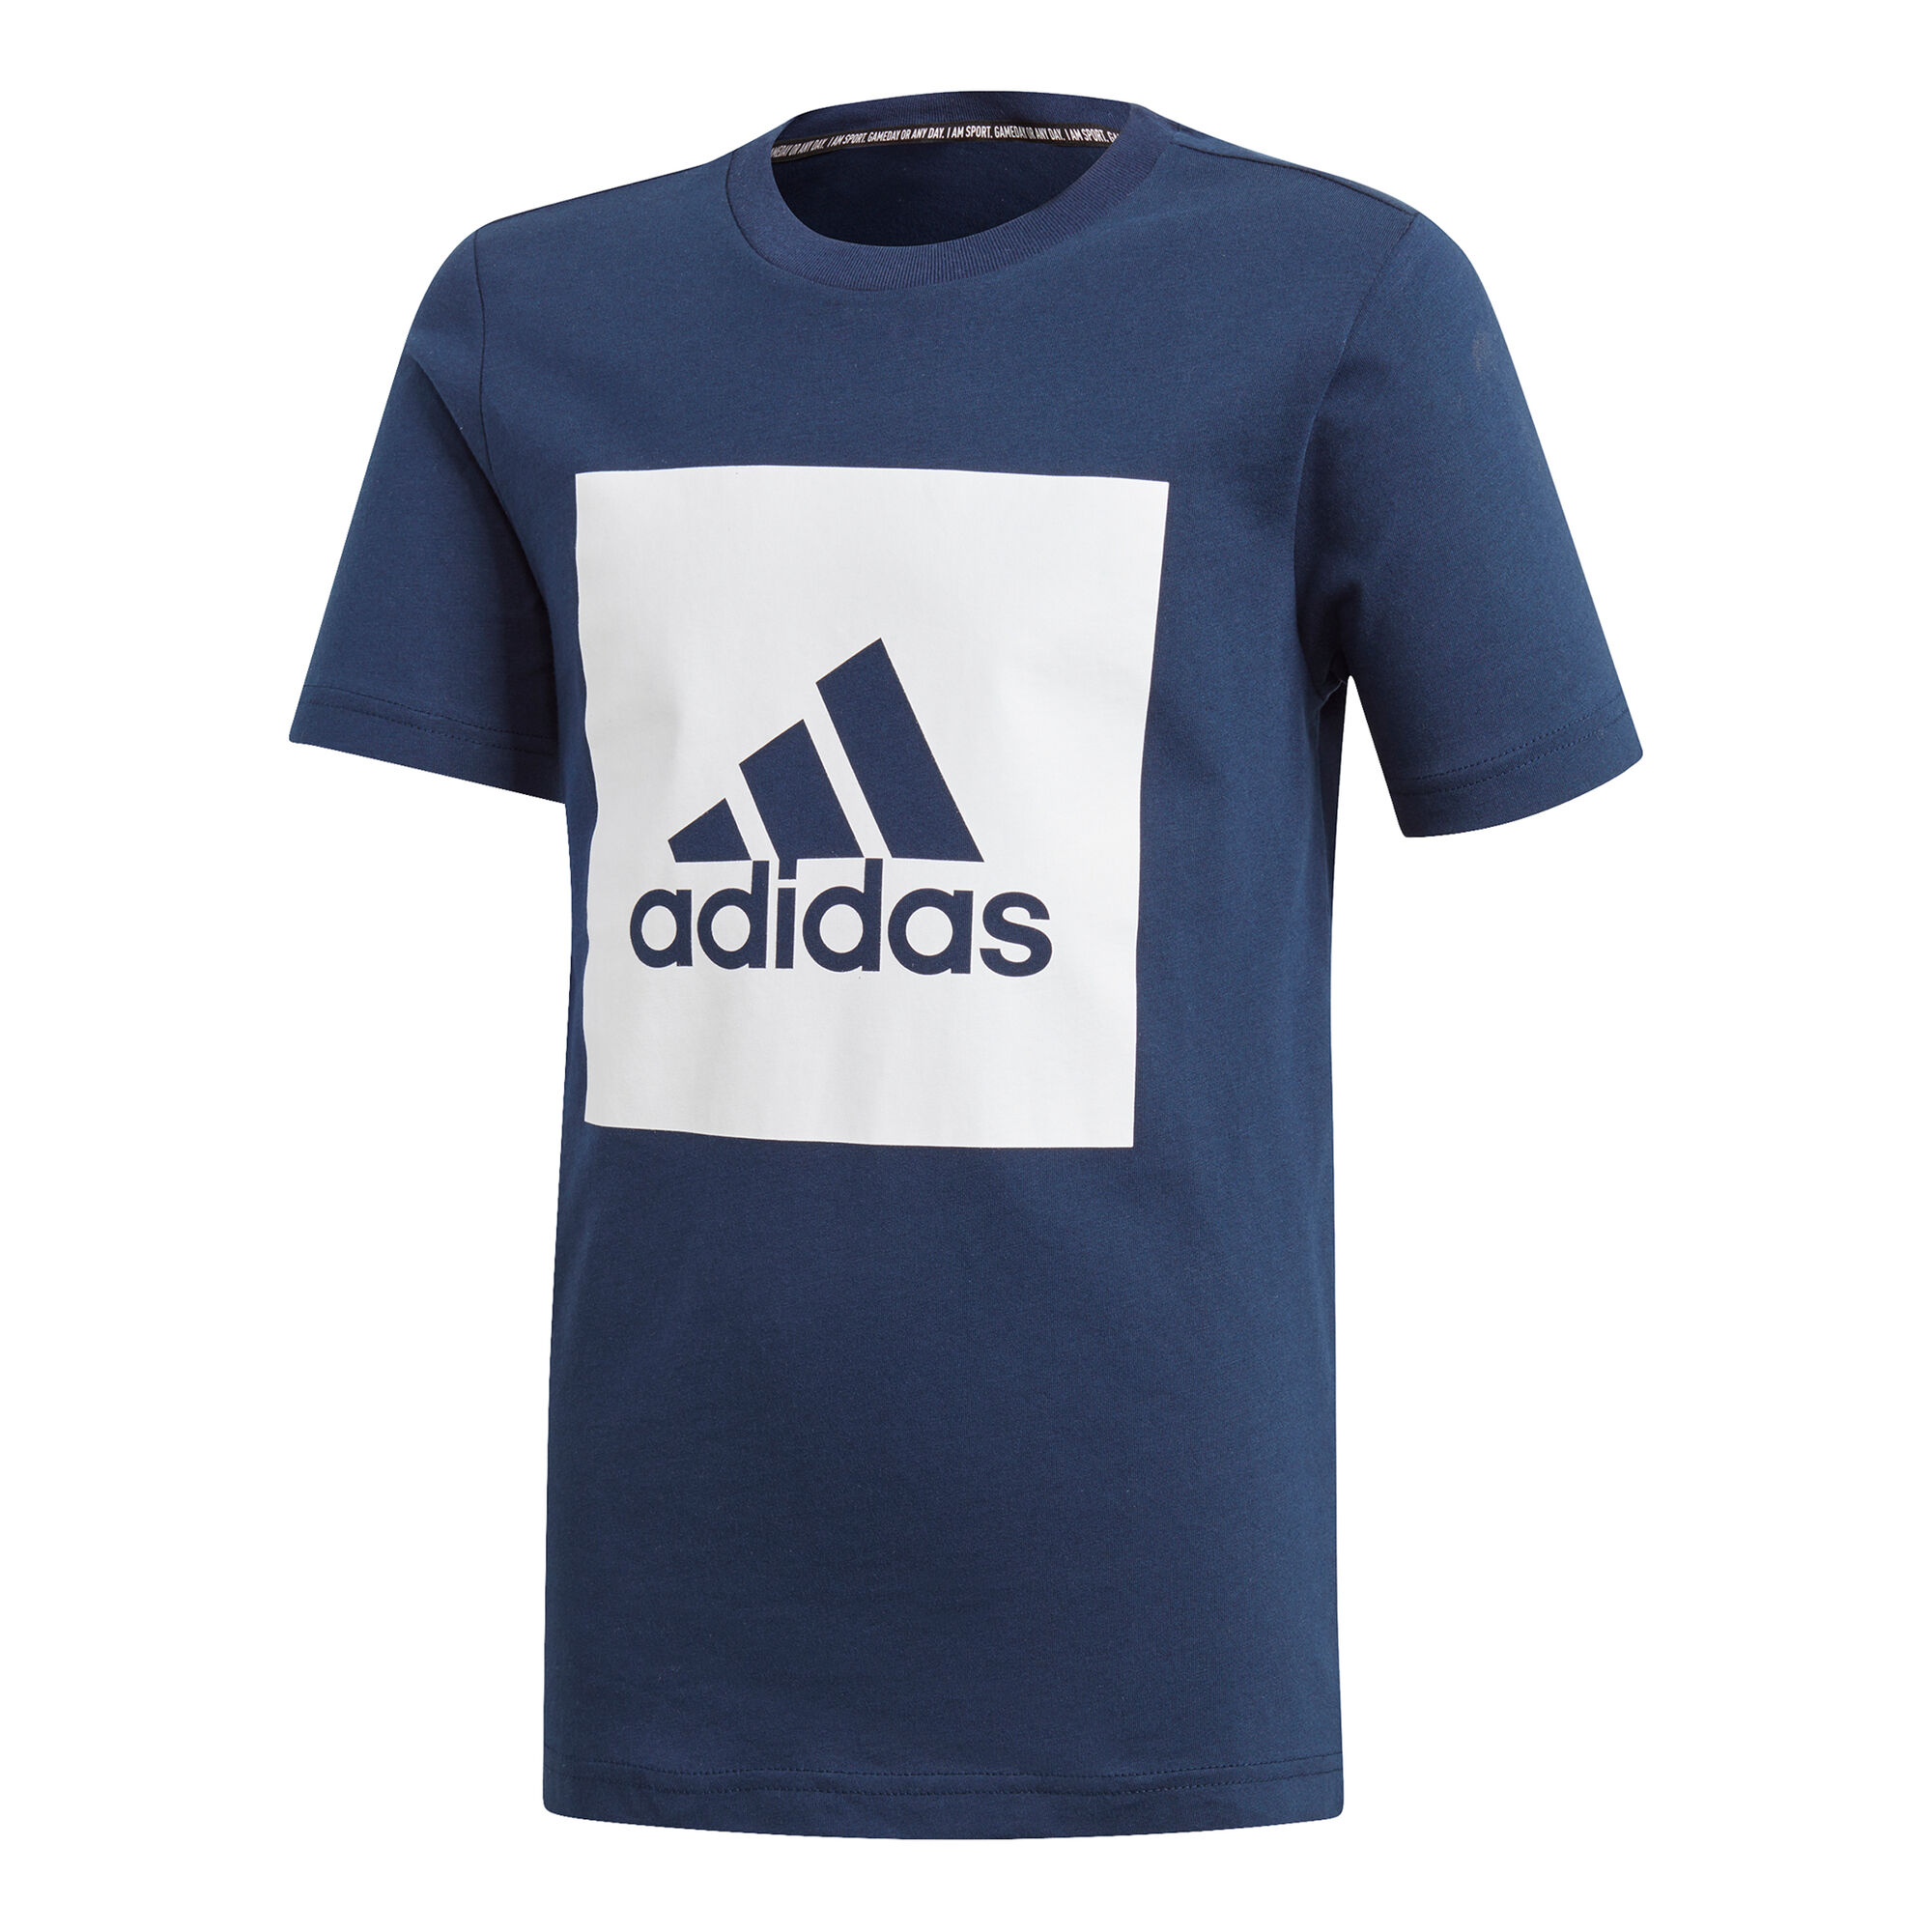 Schatting Stuwkracht spek buy adidas Must Have Bos T-Shirt Boys - Dark Blue, White online |  Tennis-Point